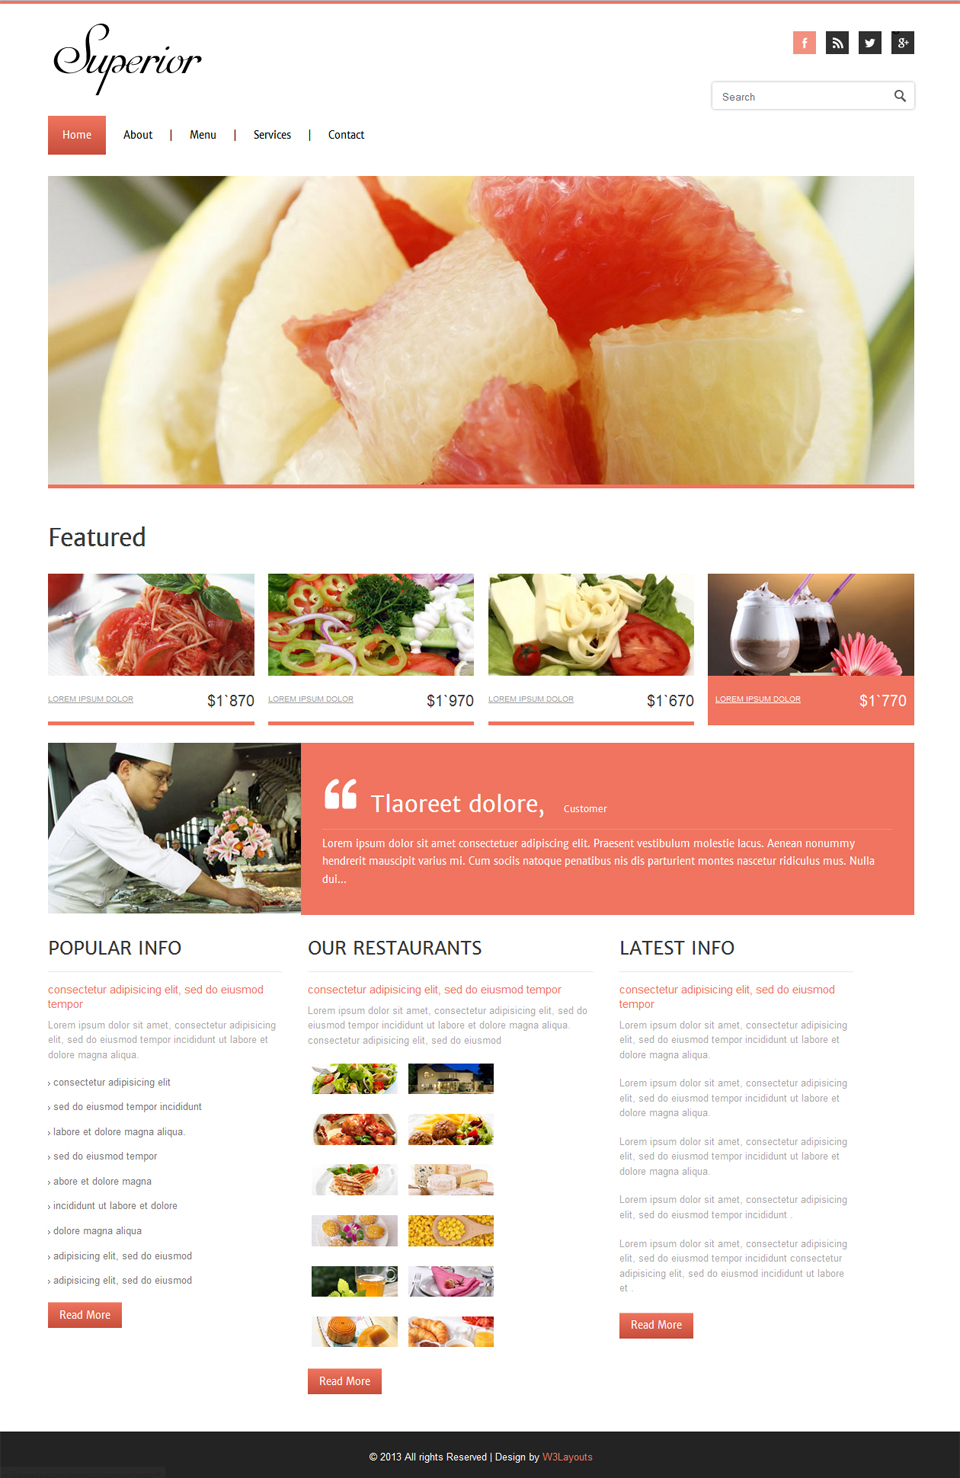 Free Superior Restaurant HTML5 Website Template